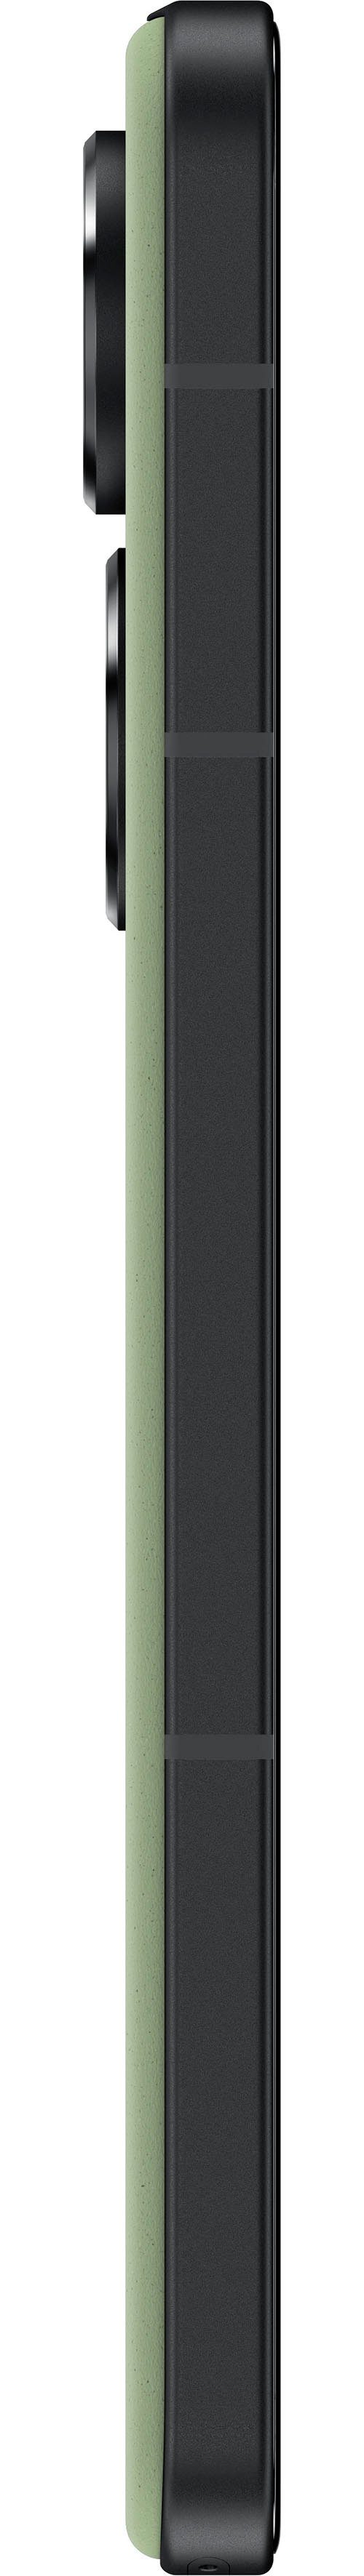 Asus ZENFONE 512 Zoll, Kamera) (14,98 GB MP Smartphone grün 50 10 Speicherplatz, cm/5,9